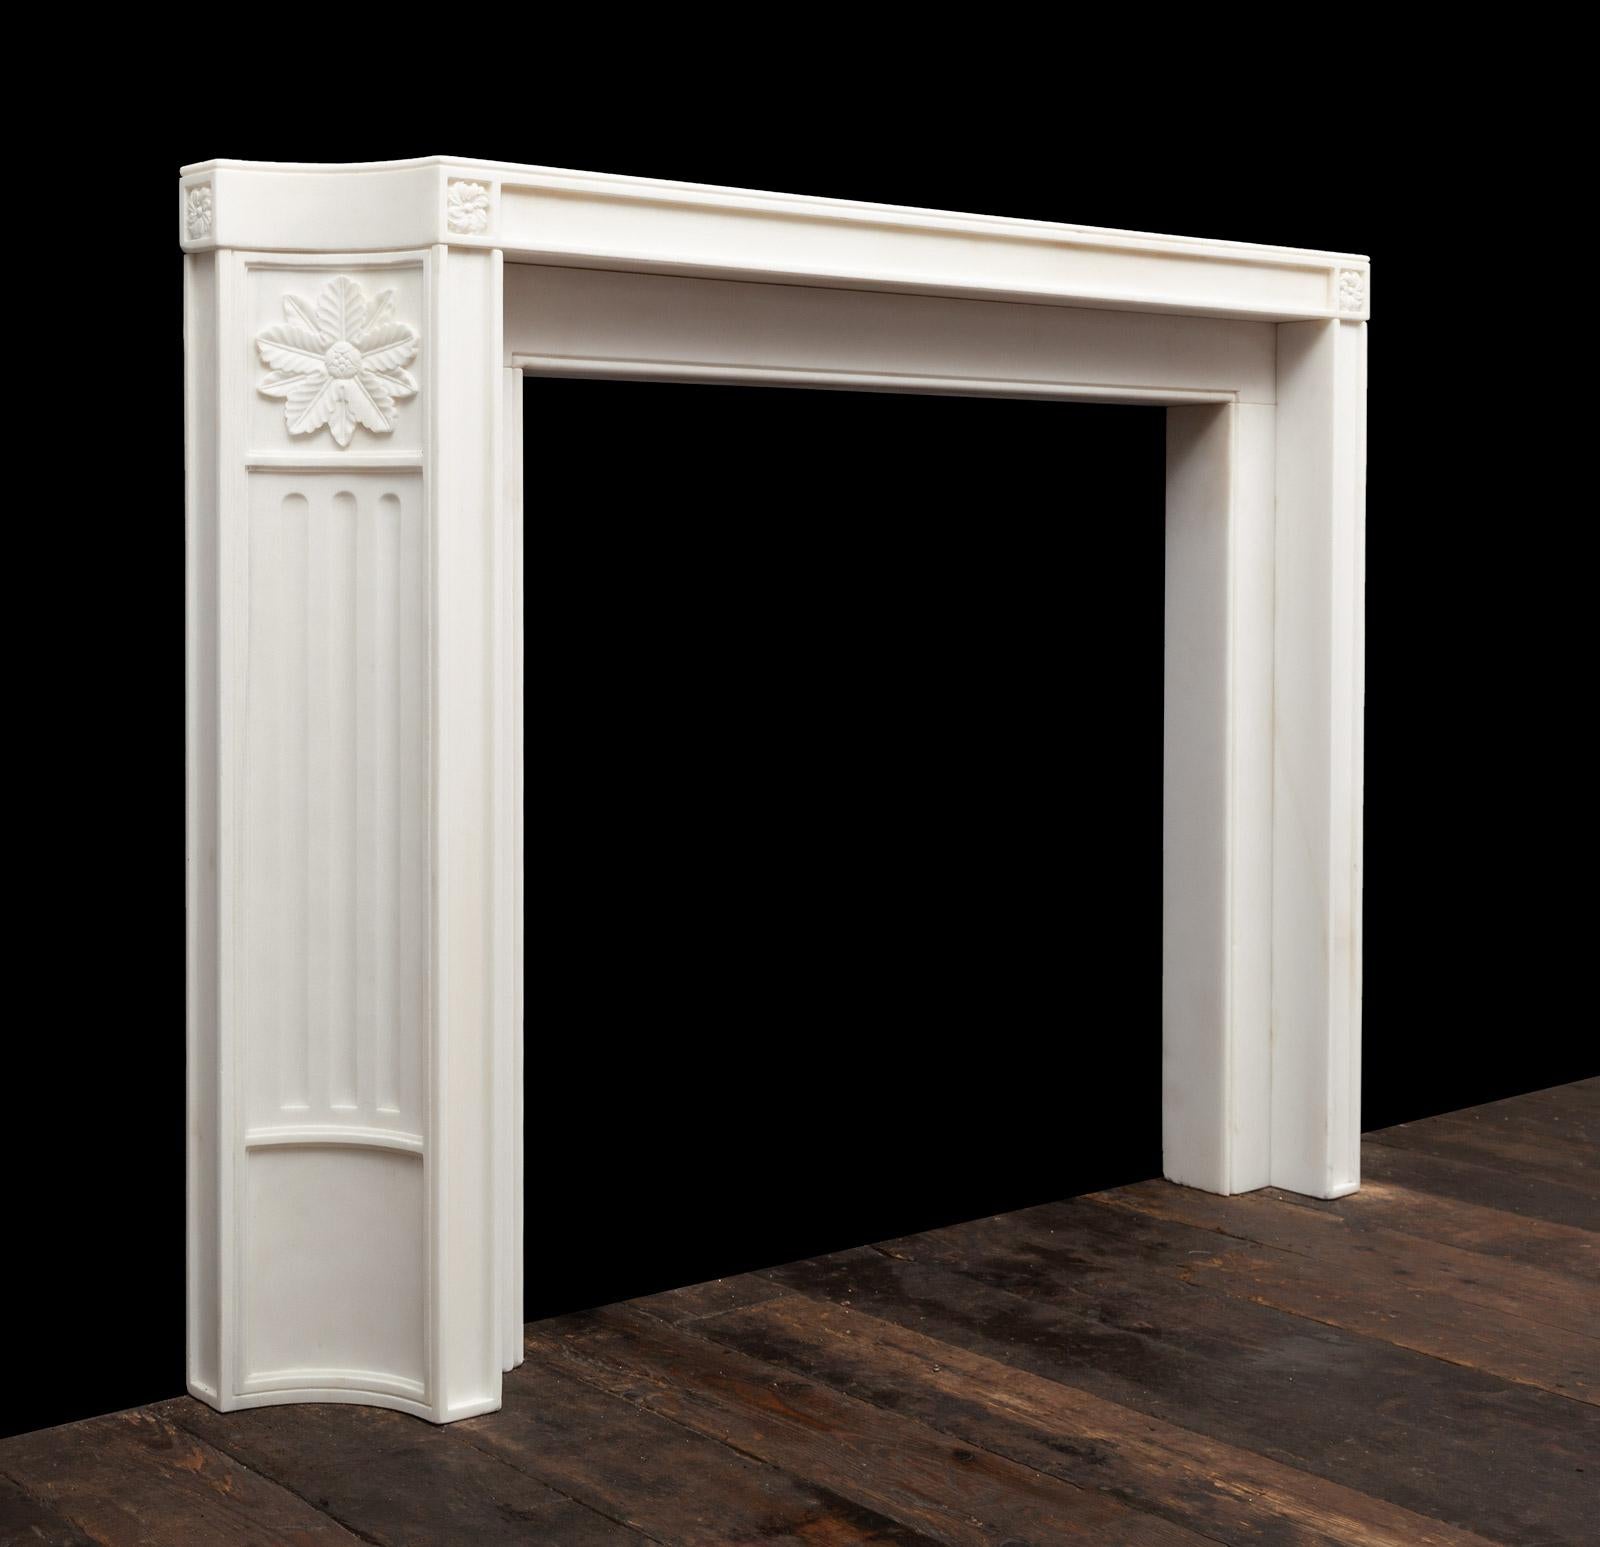 Northern Irish Stylish White Statuary Marble Fireplace of Early 20th Century Form